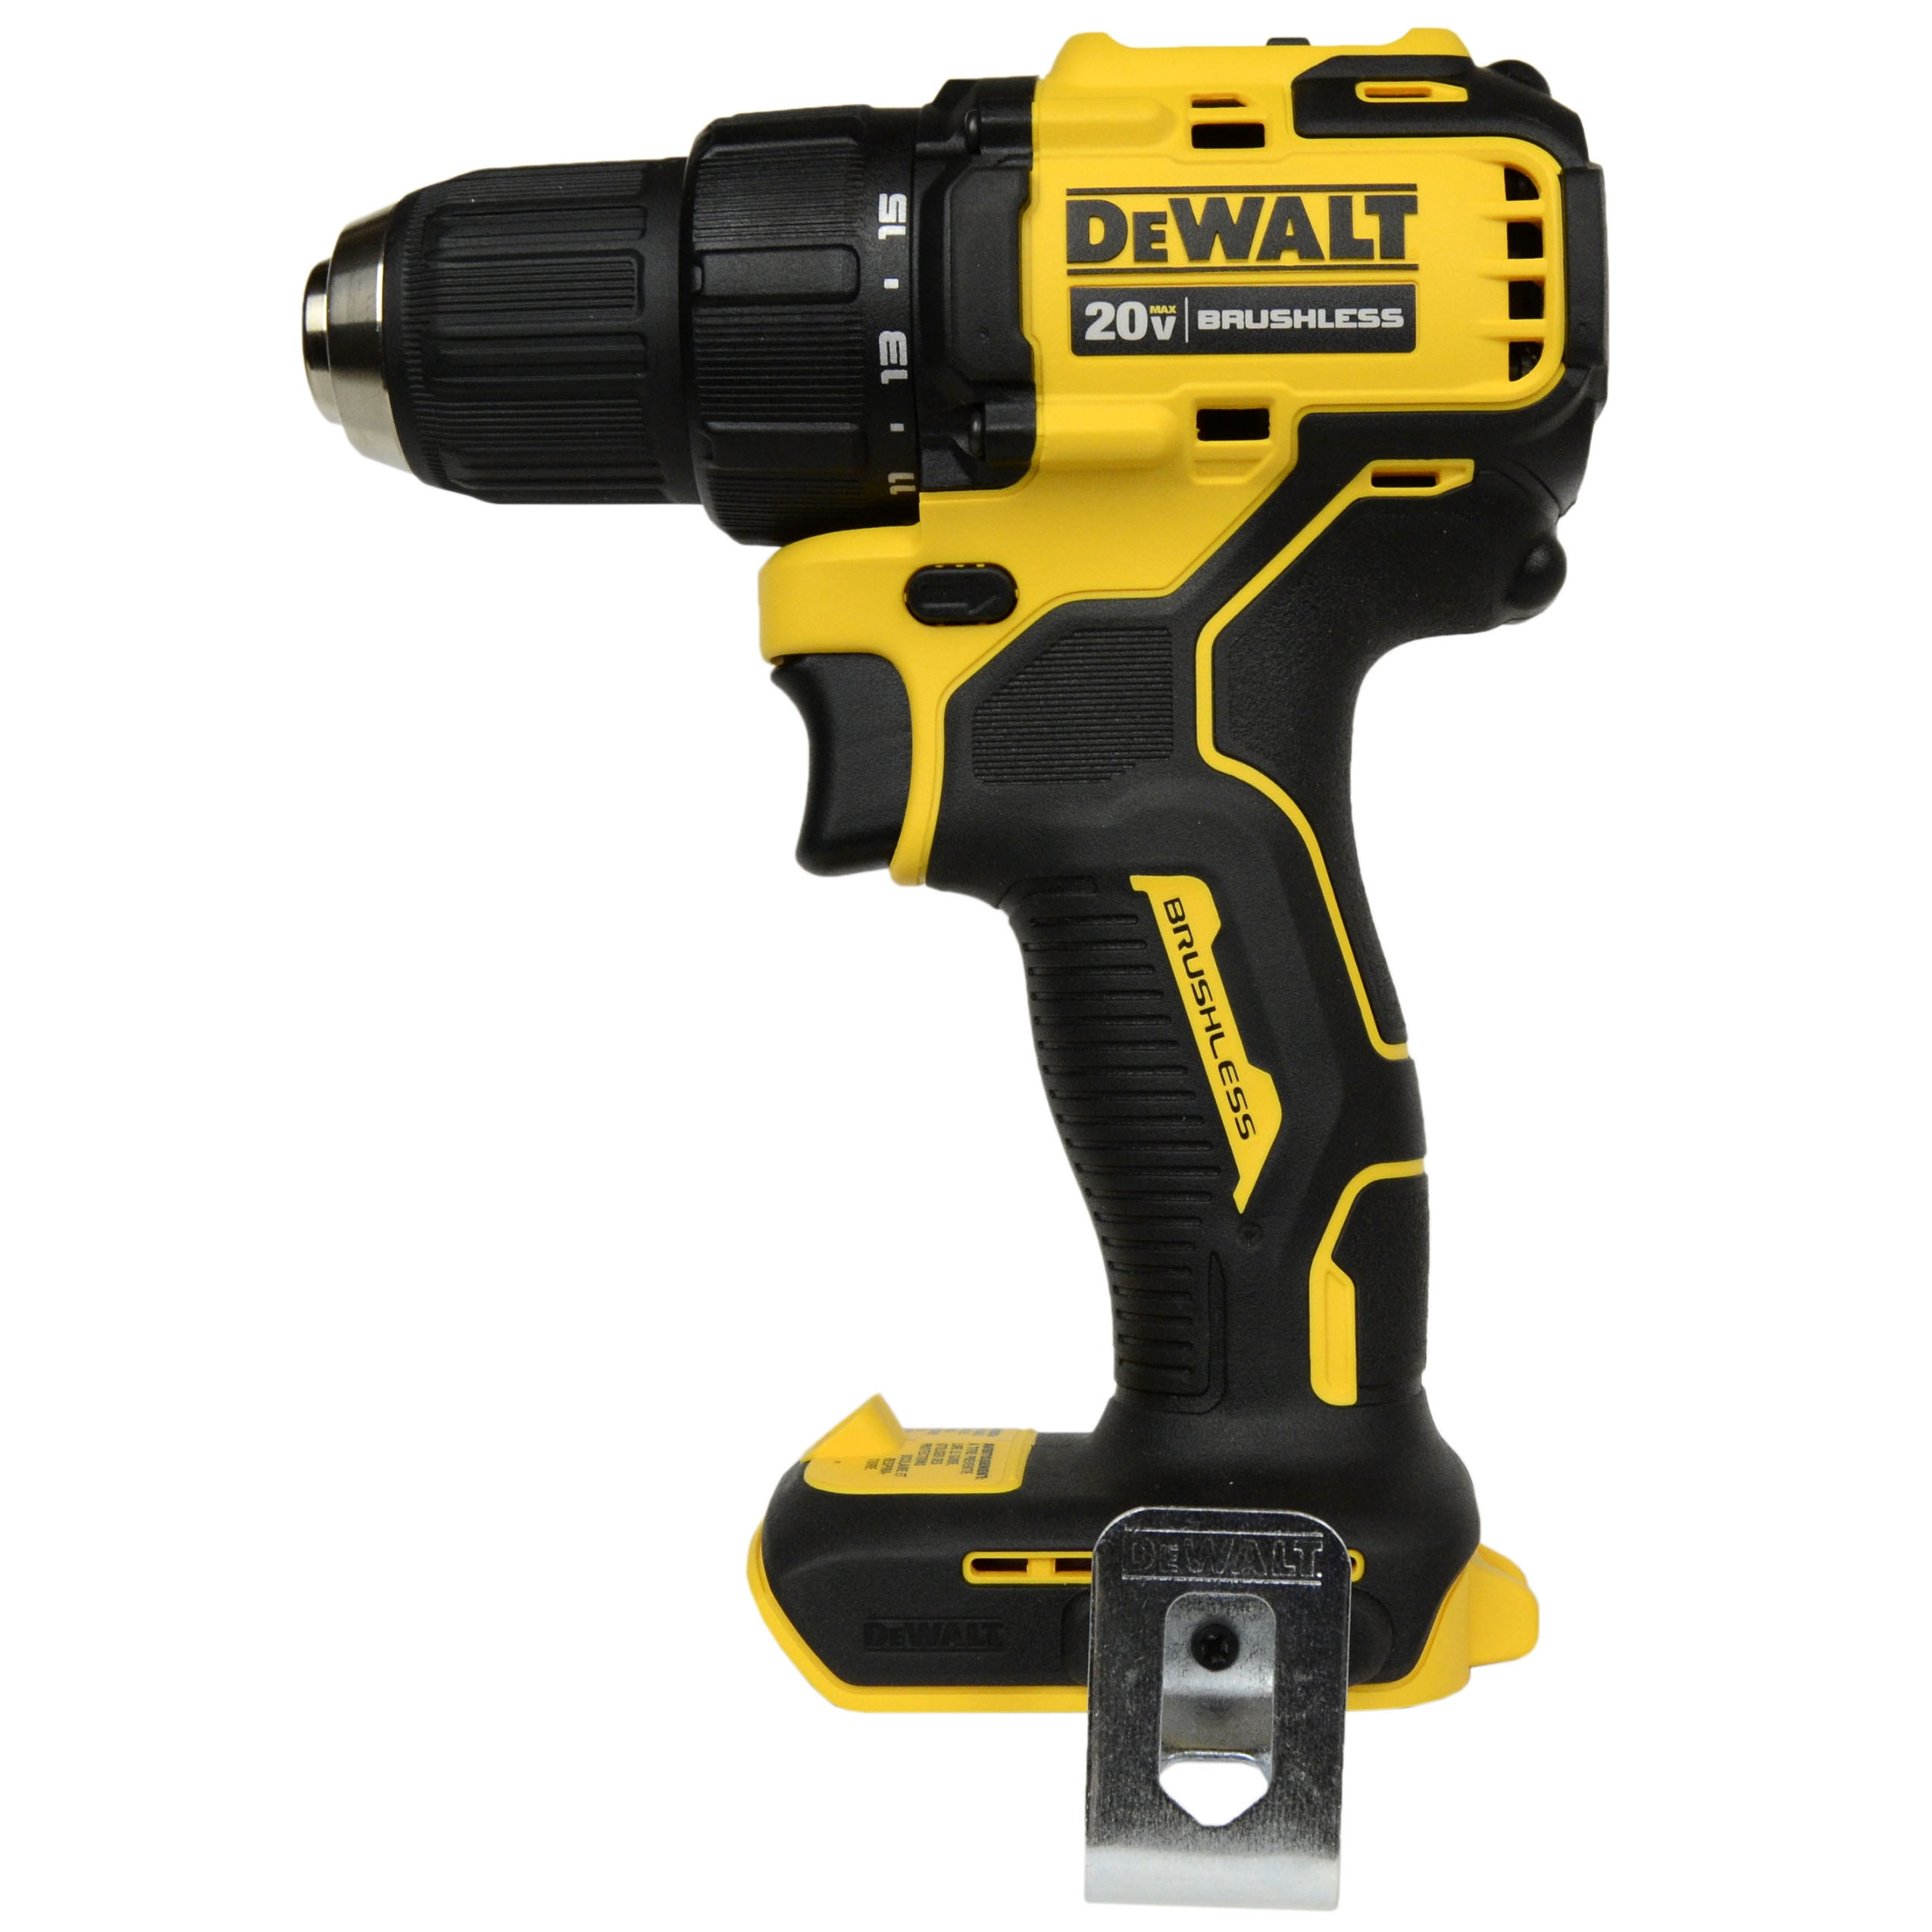 Dewalt 20V Max Brushless Cordless Drill Driver – Tool Only - Walmart.com